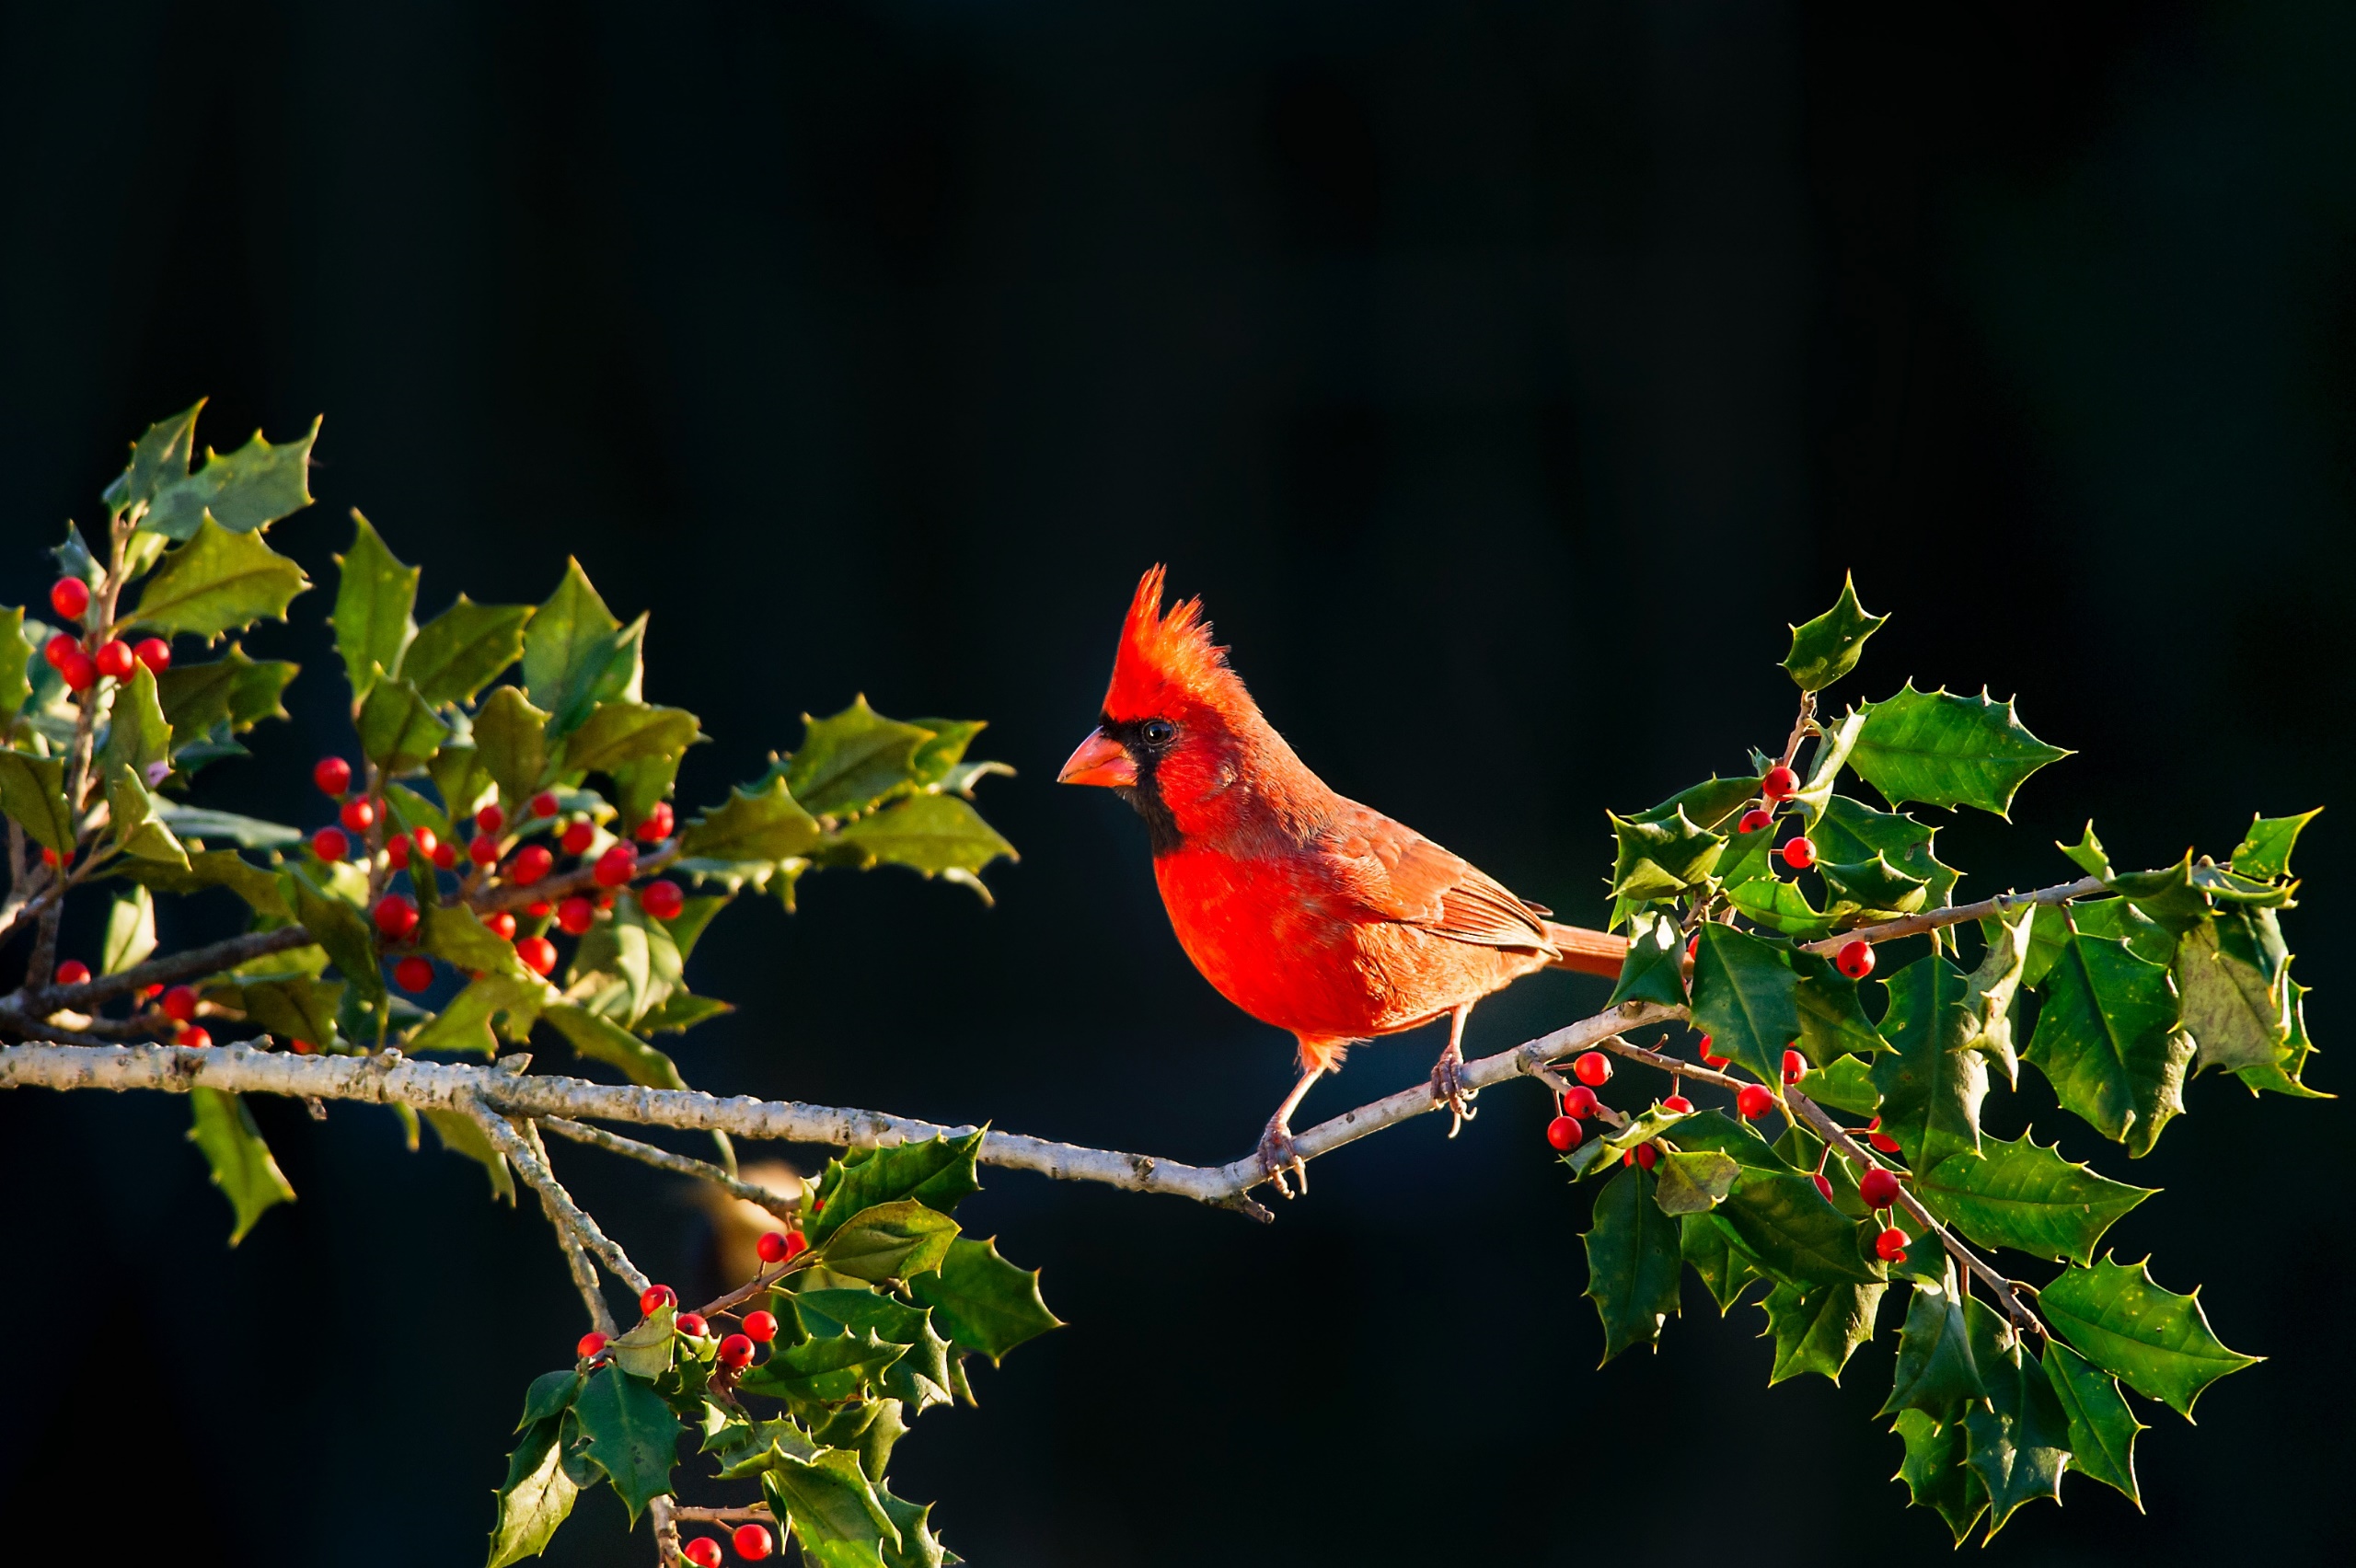 General 2560x1704 nature animals berries birds cardinals vibrant